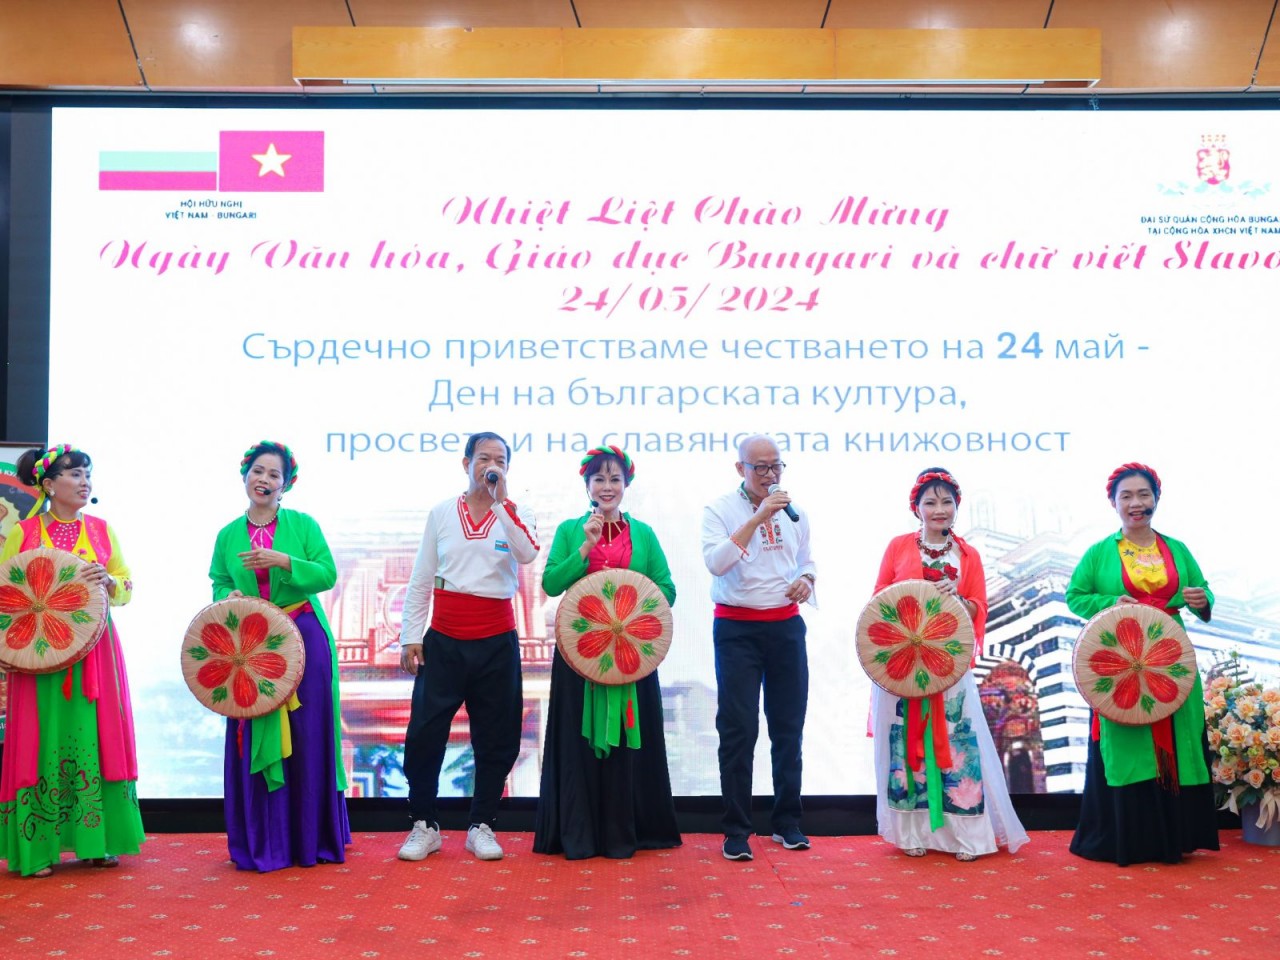 Vietnam - Bulgaria performance at the event (Photo: Dinh Hoa)